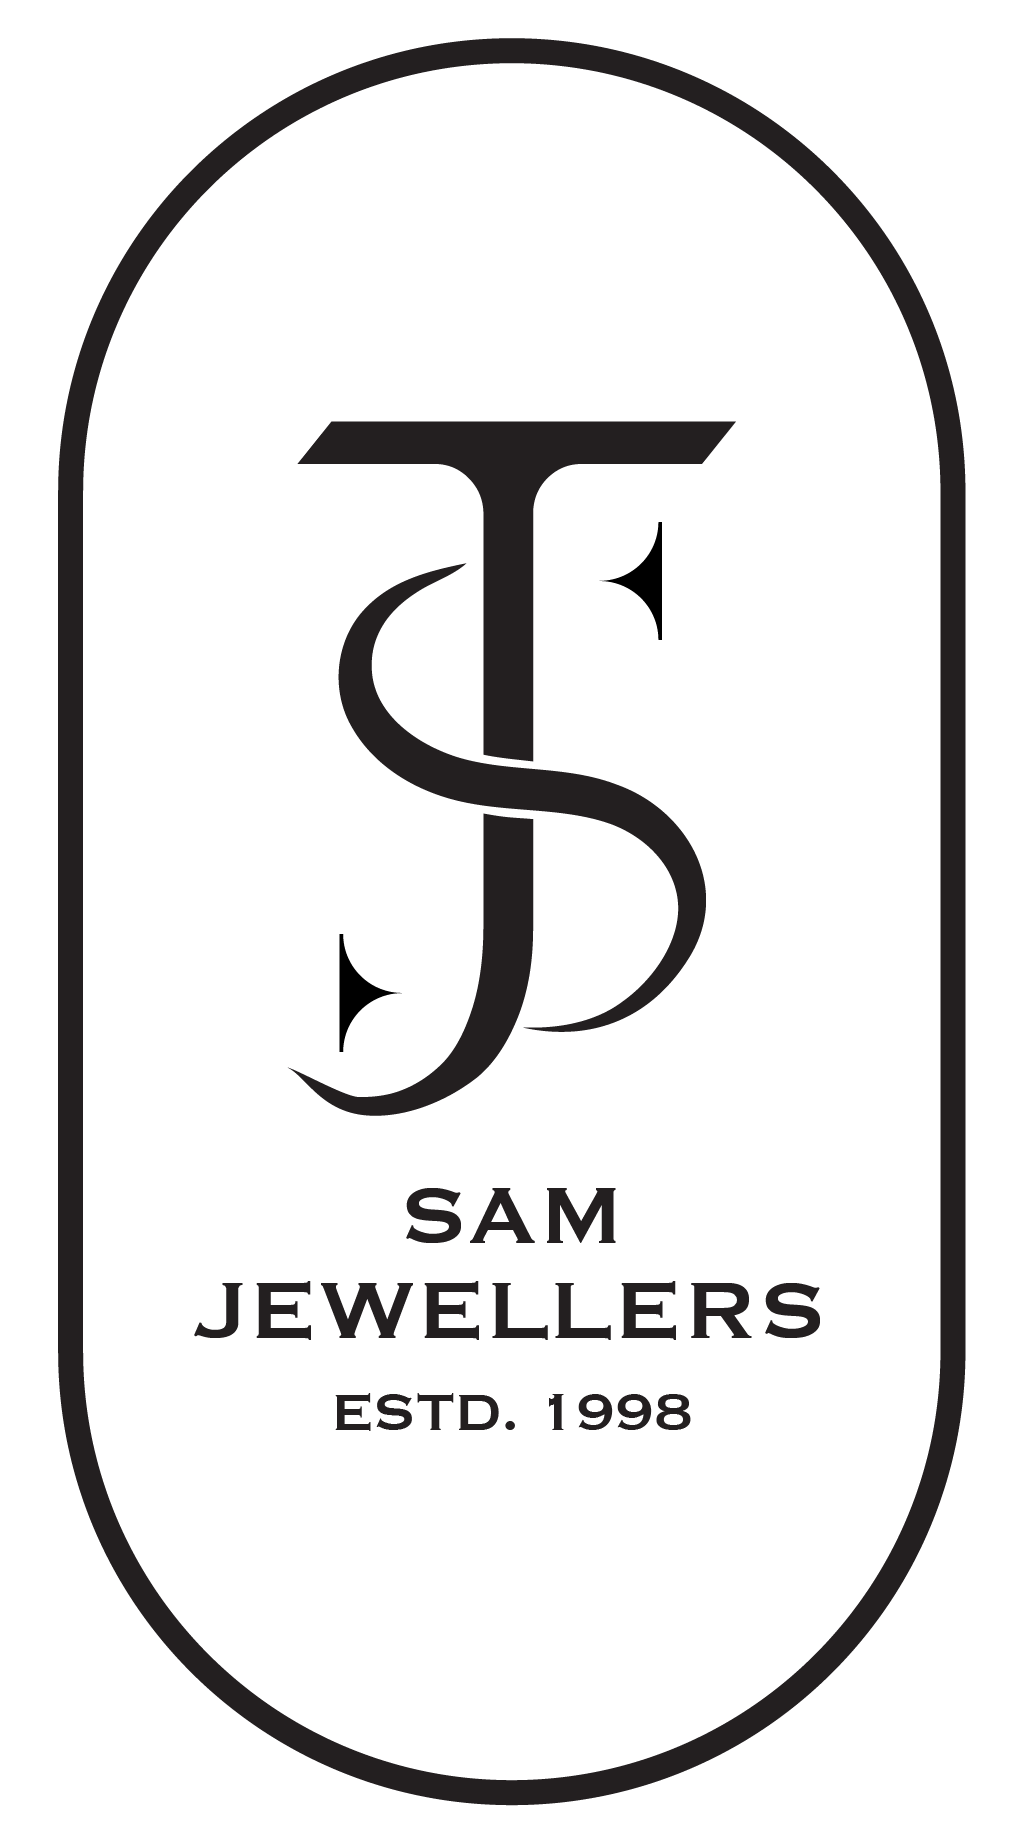 Welcome to Sam Jewellers